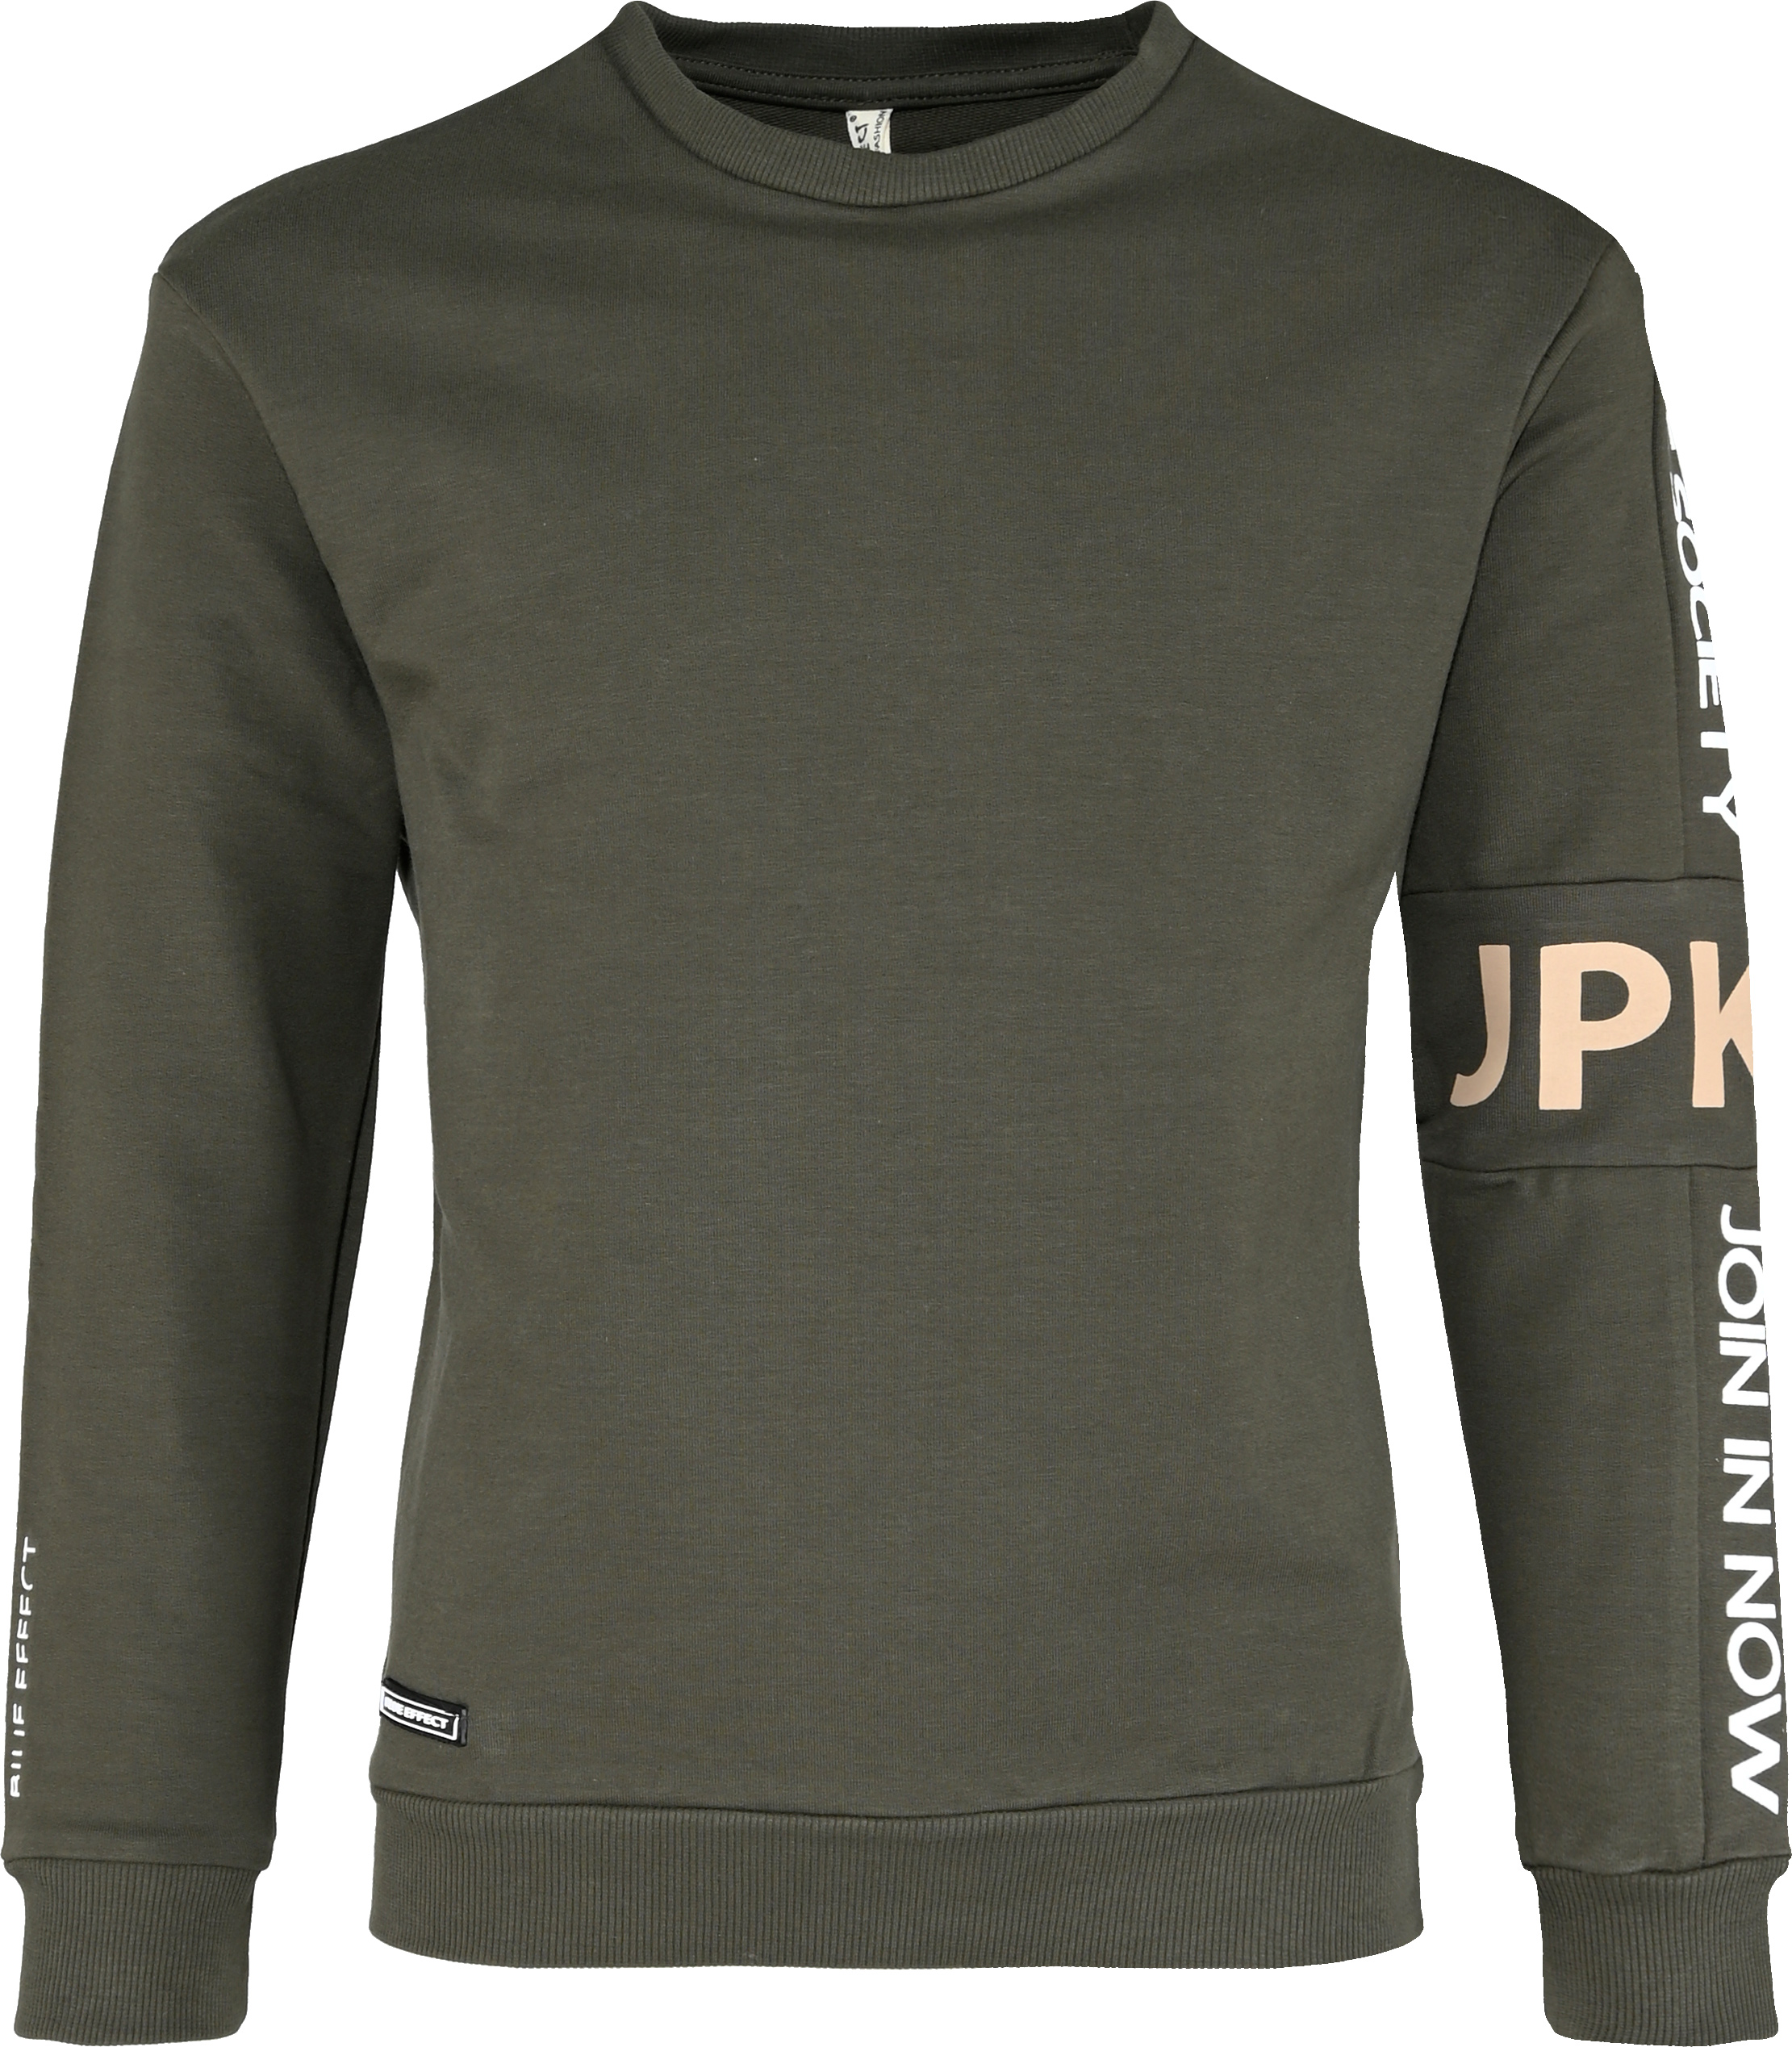 6162-Boys Sweatshirt -JPK